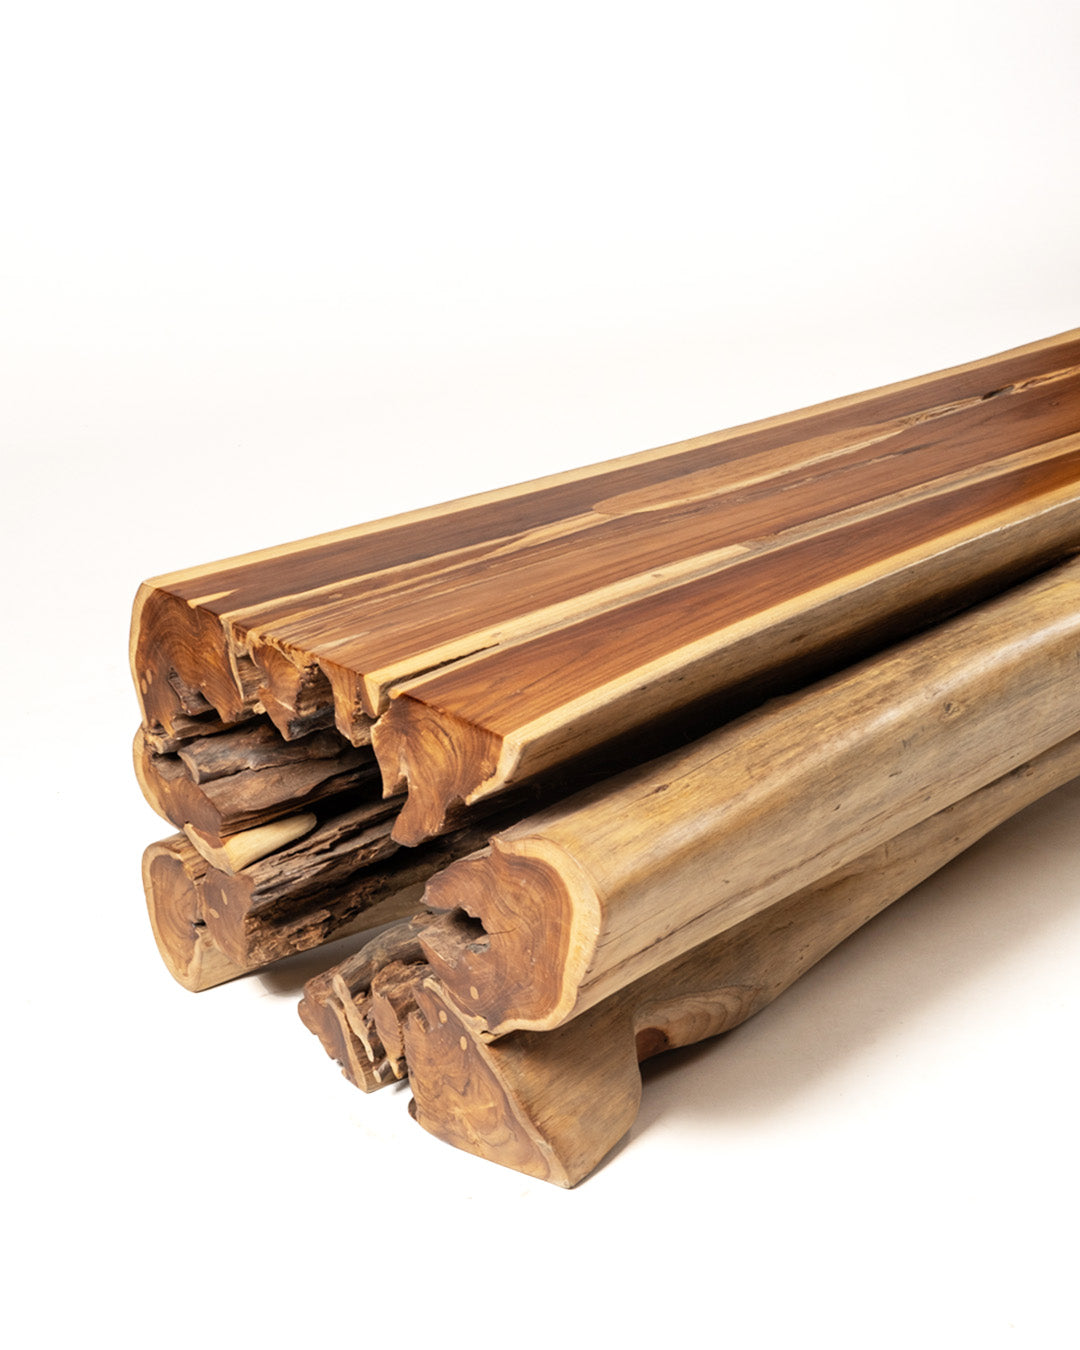 Mesa de centro de tronco madera maciza natural de teca Uner rustico, hecho a mano acabado natural, Largo 218cm x Ancho 80 cm x Alto 50 cm, origen Indonesia